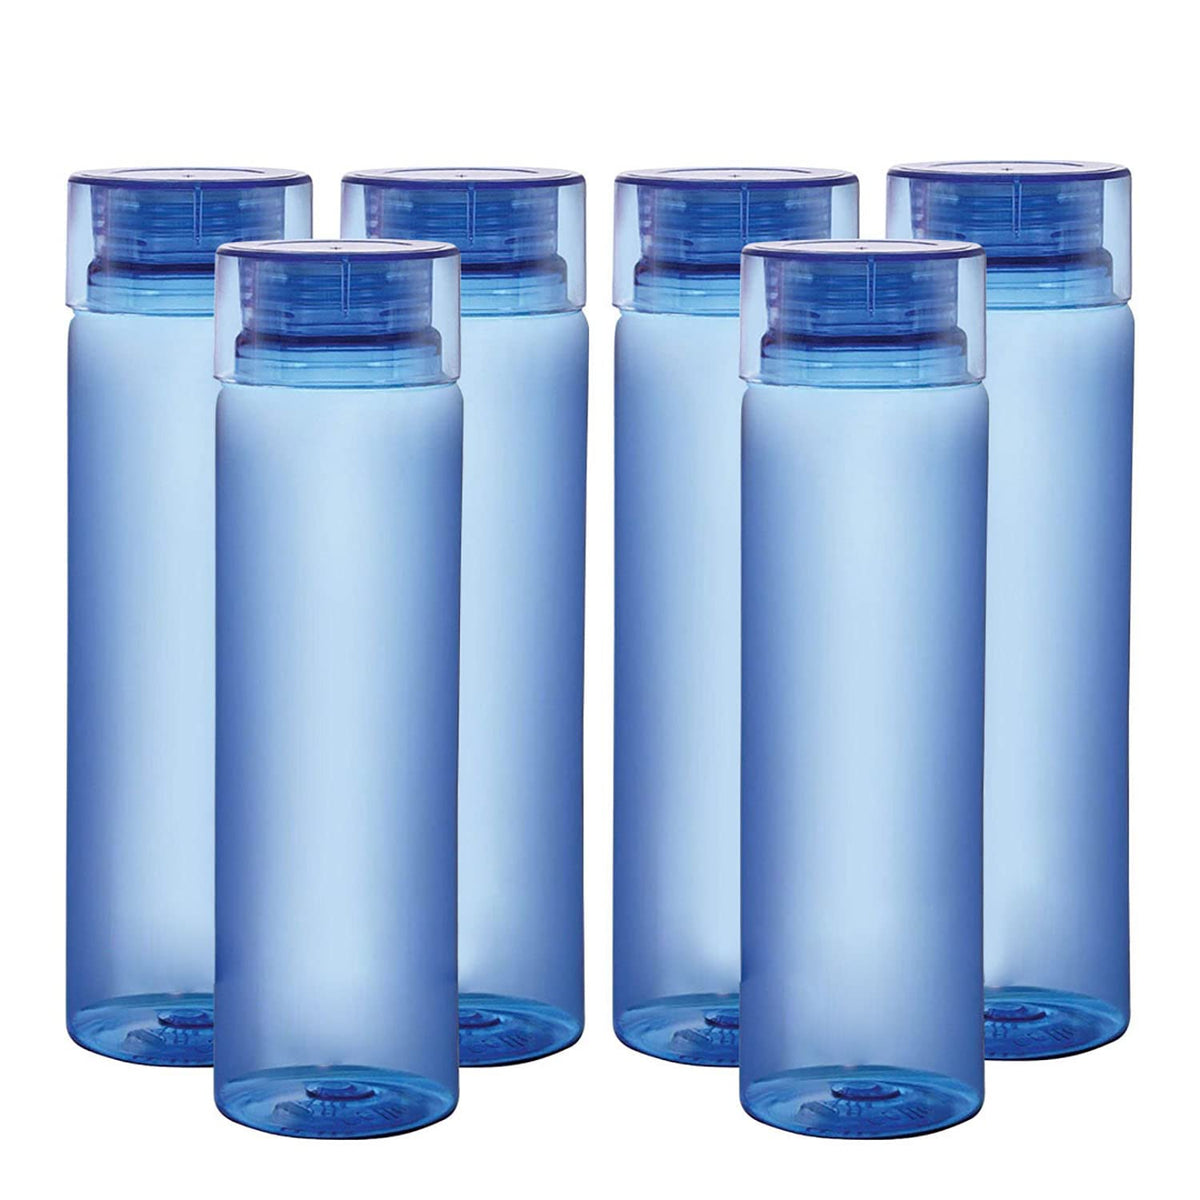 Urbane Home BPA Free Plastic Water Bottles | Breakproof, Leakproof, Food Grade PET Bottles | Water Bottle for Kids & Adults | Plastic Bottle Set of 6 |Blue